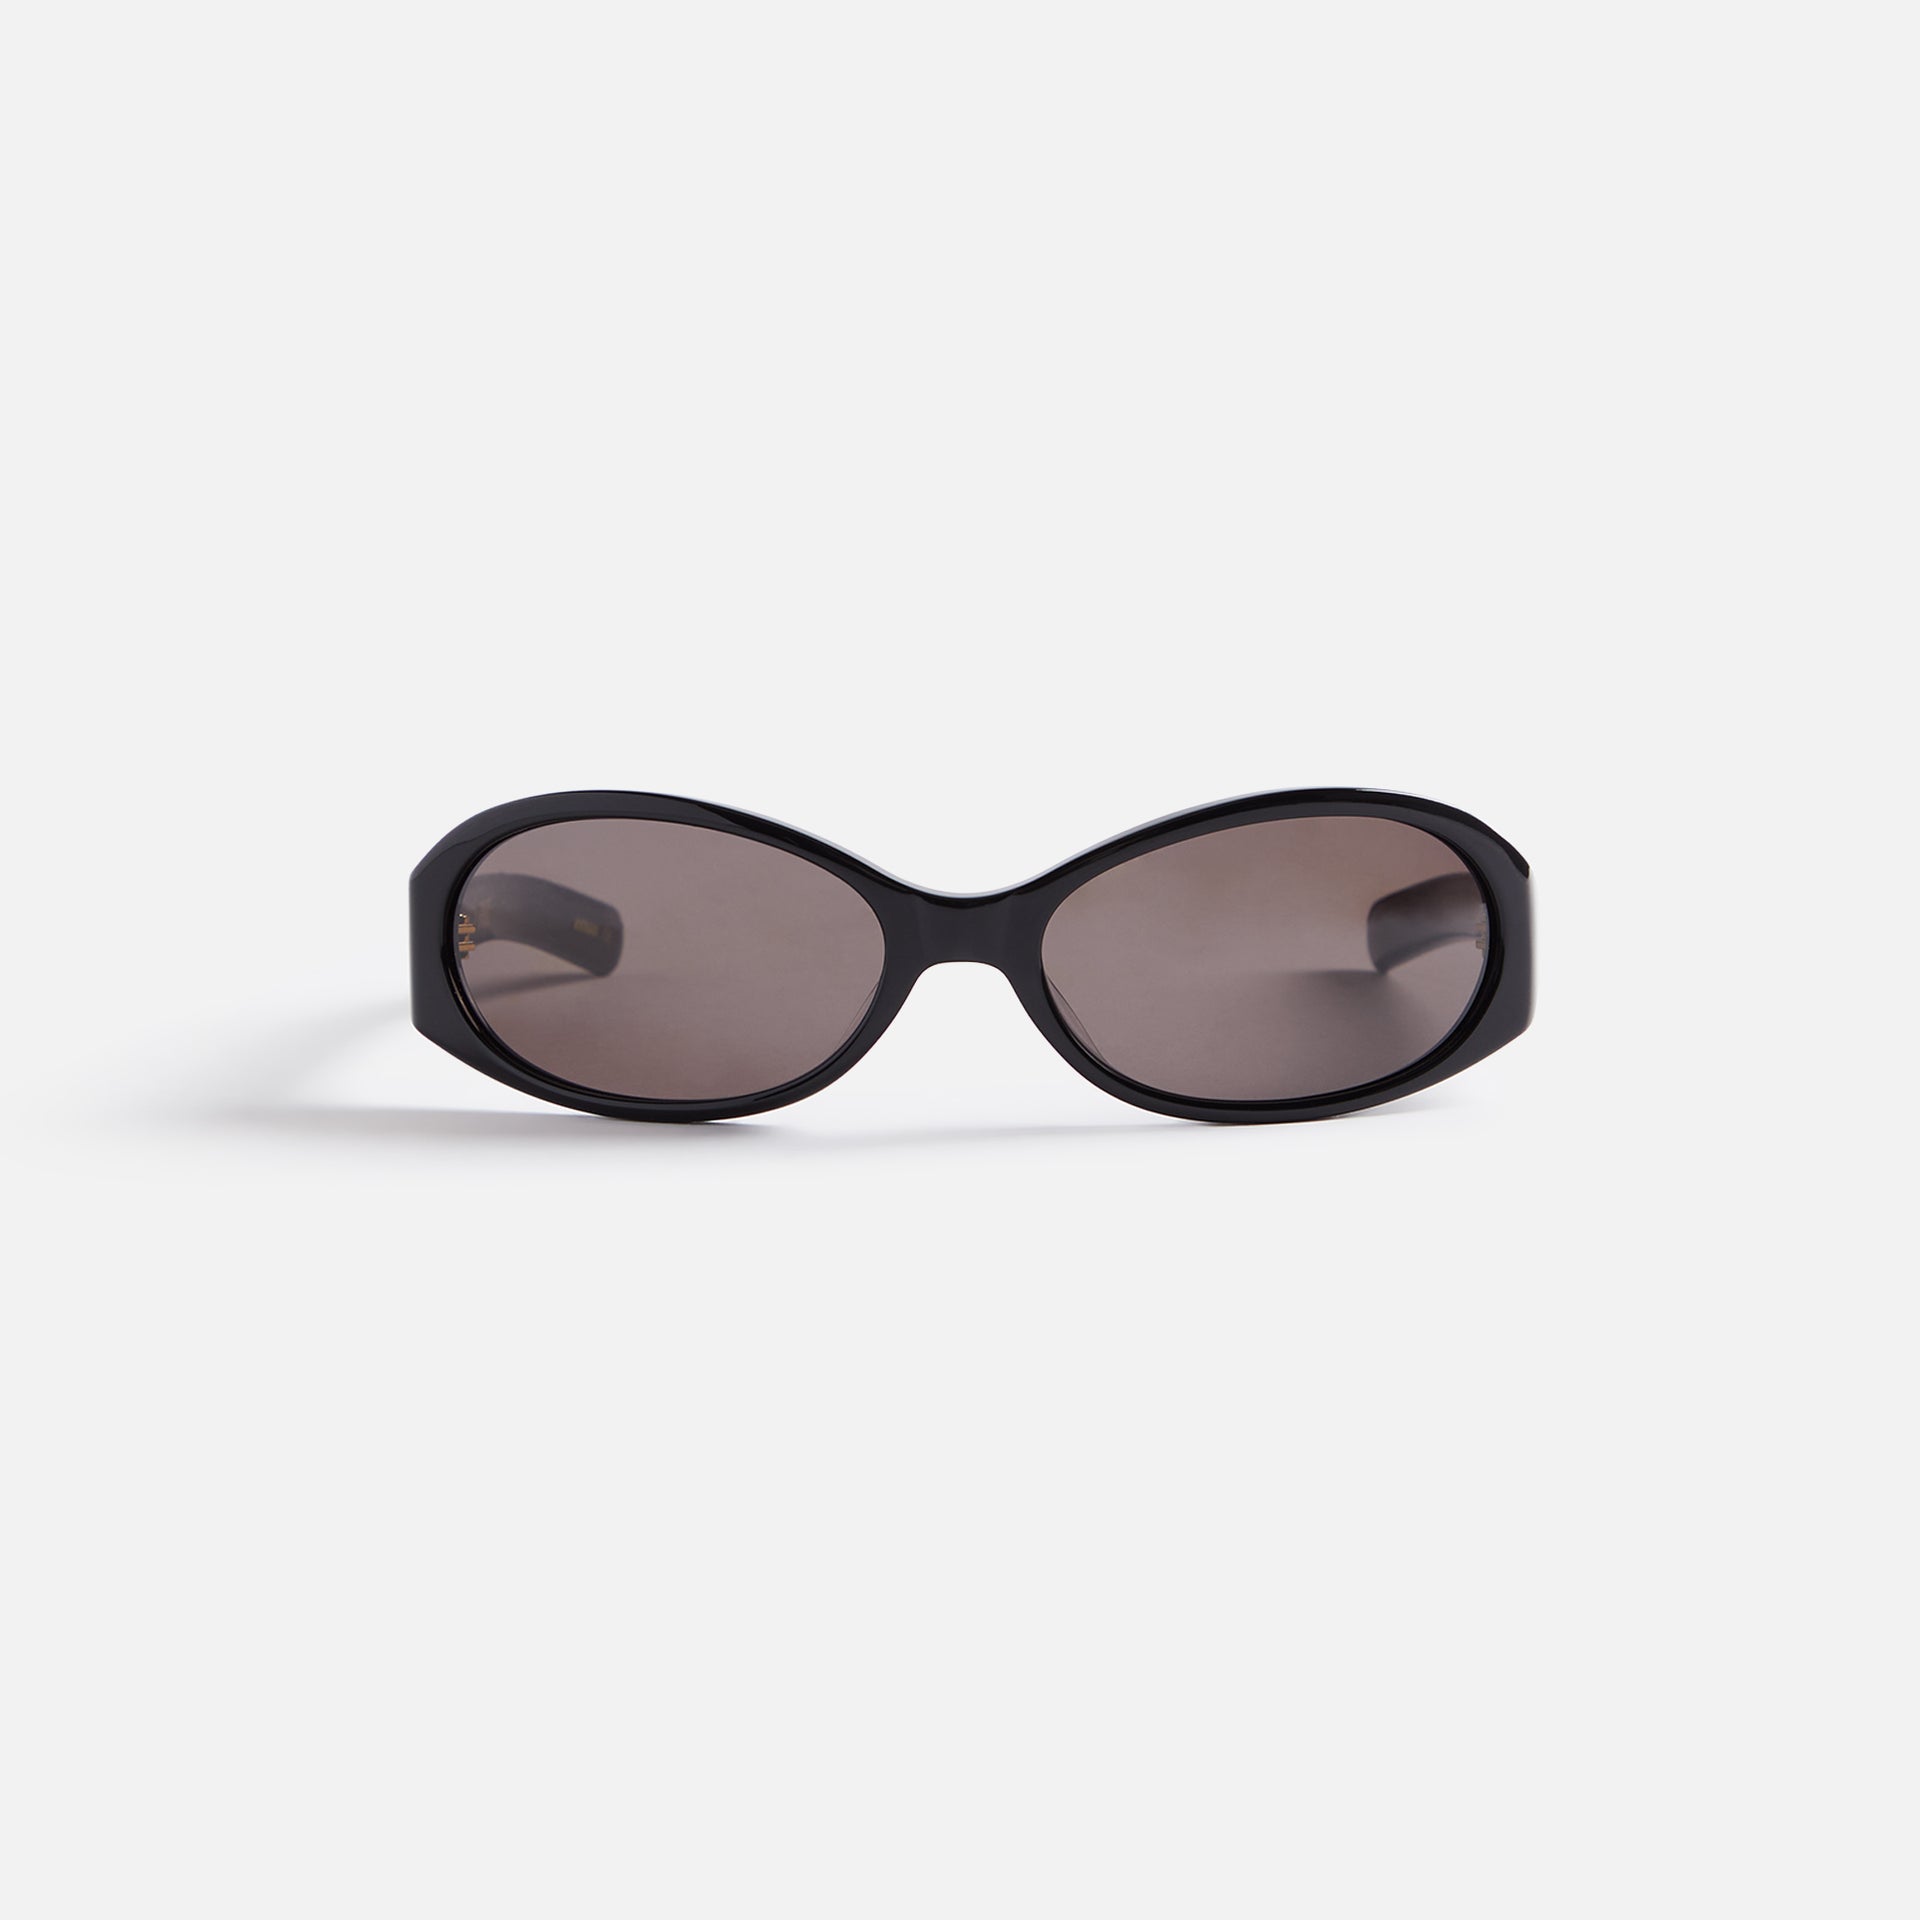 Flatlist Opel Sunglasses - Solid Black / Solid Black Lens